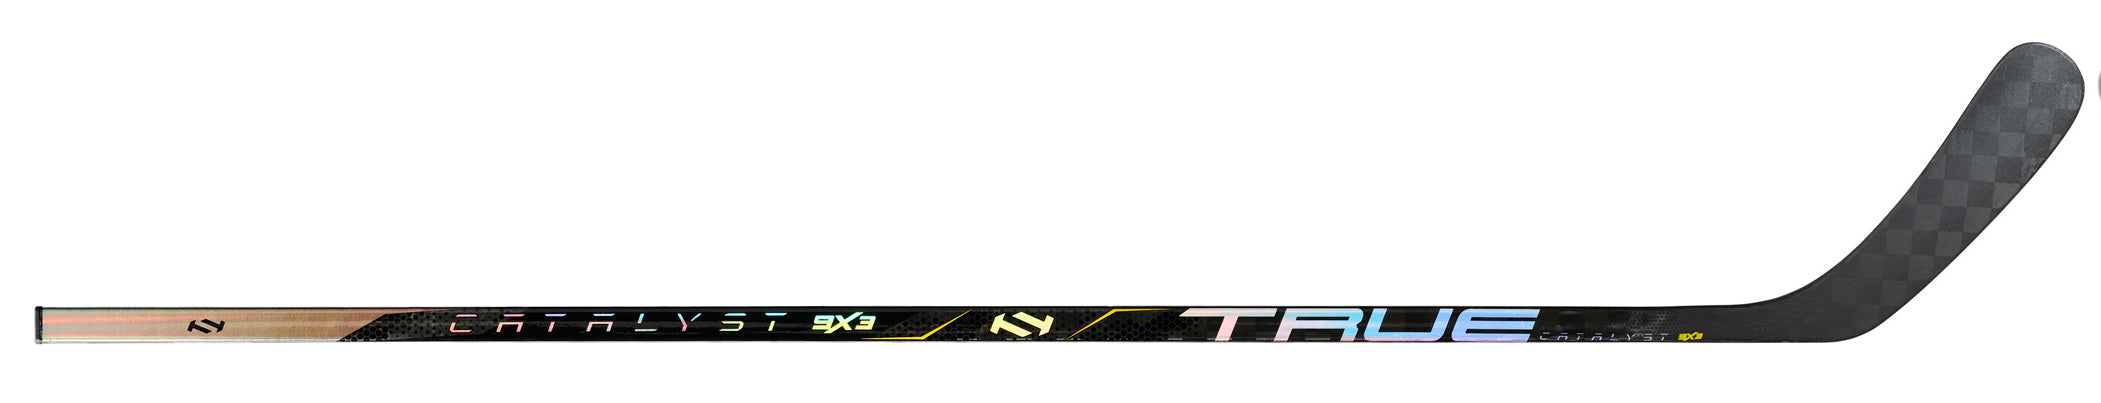 True Catalyst 9X3 Intermediate Hockey Stick